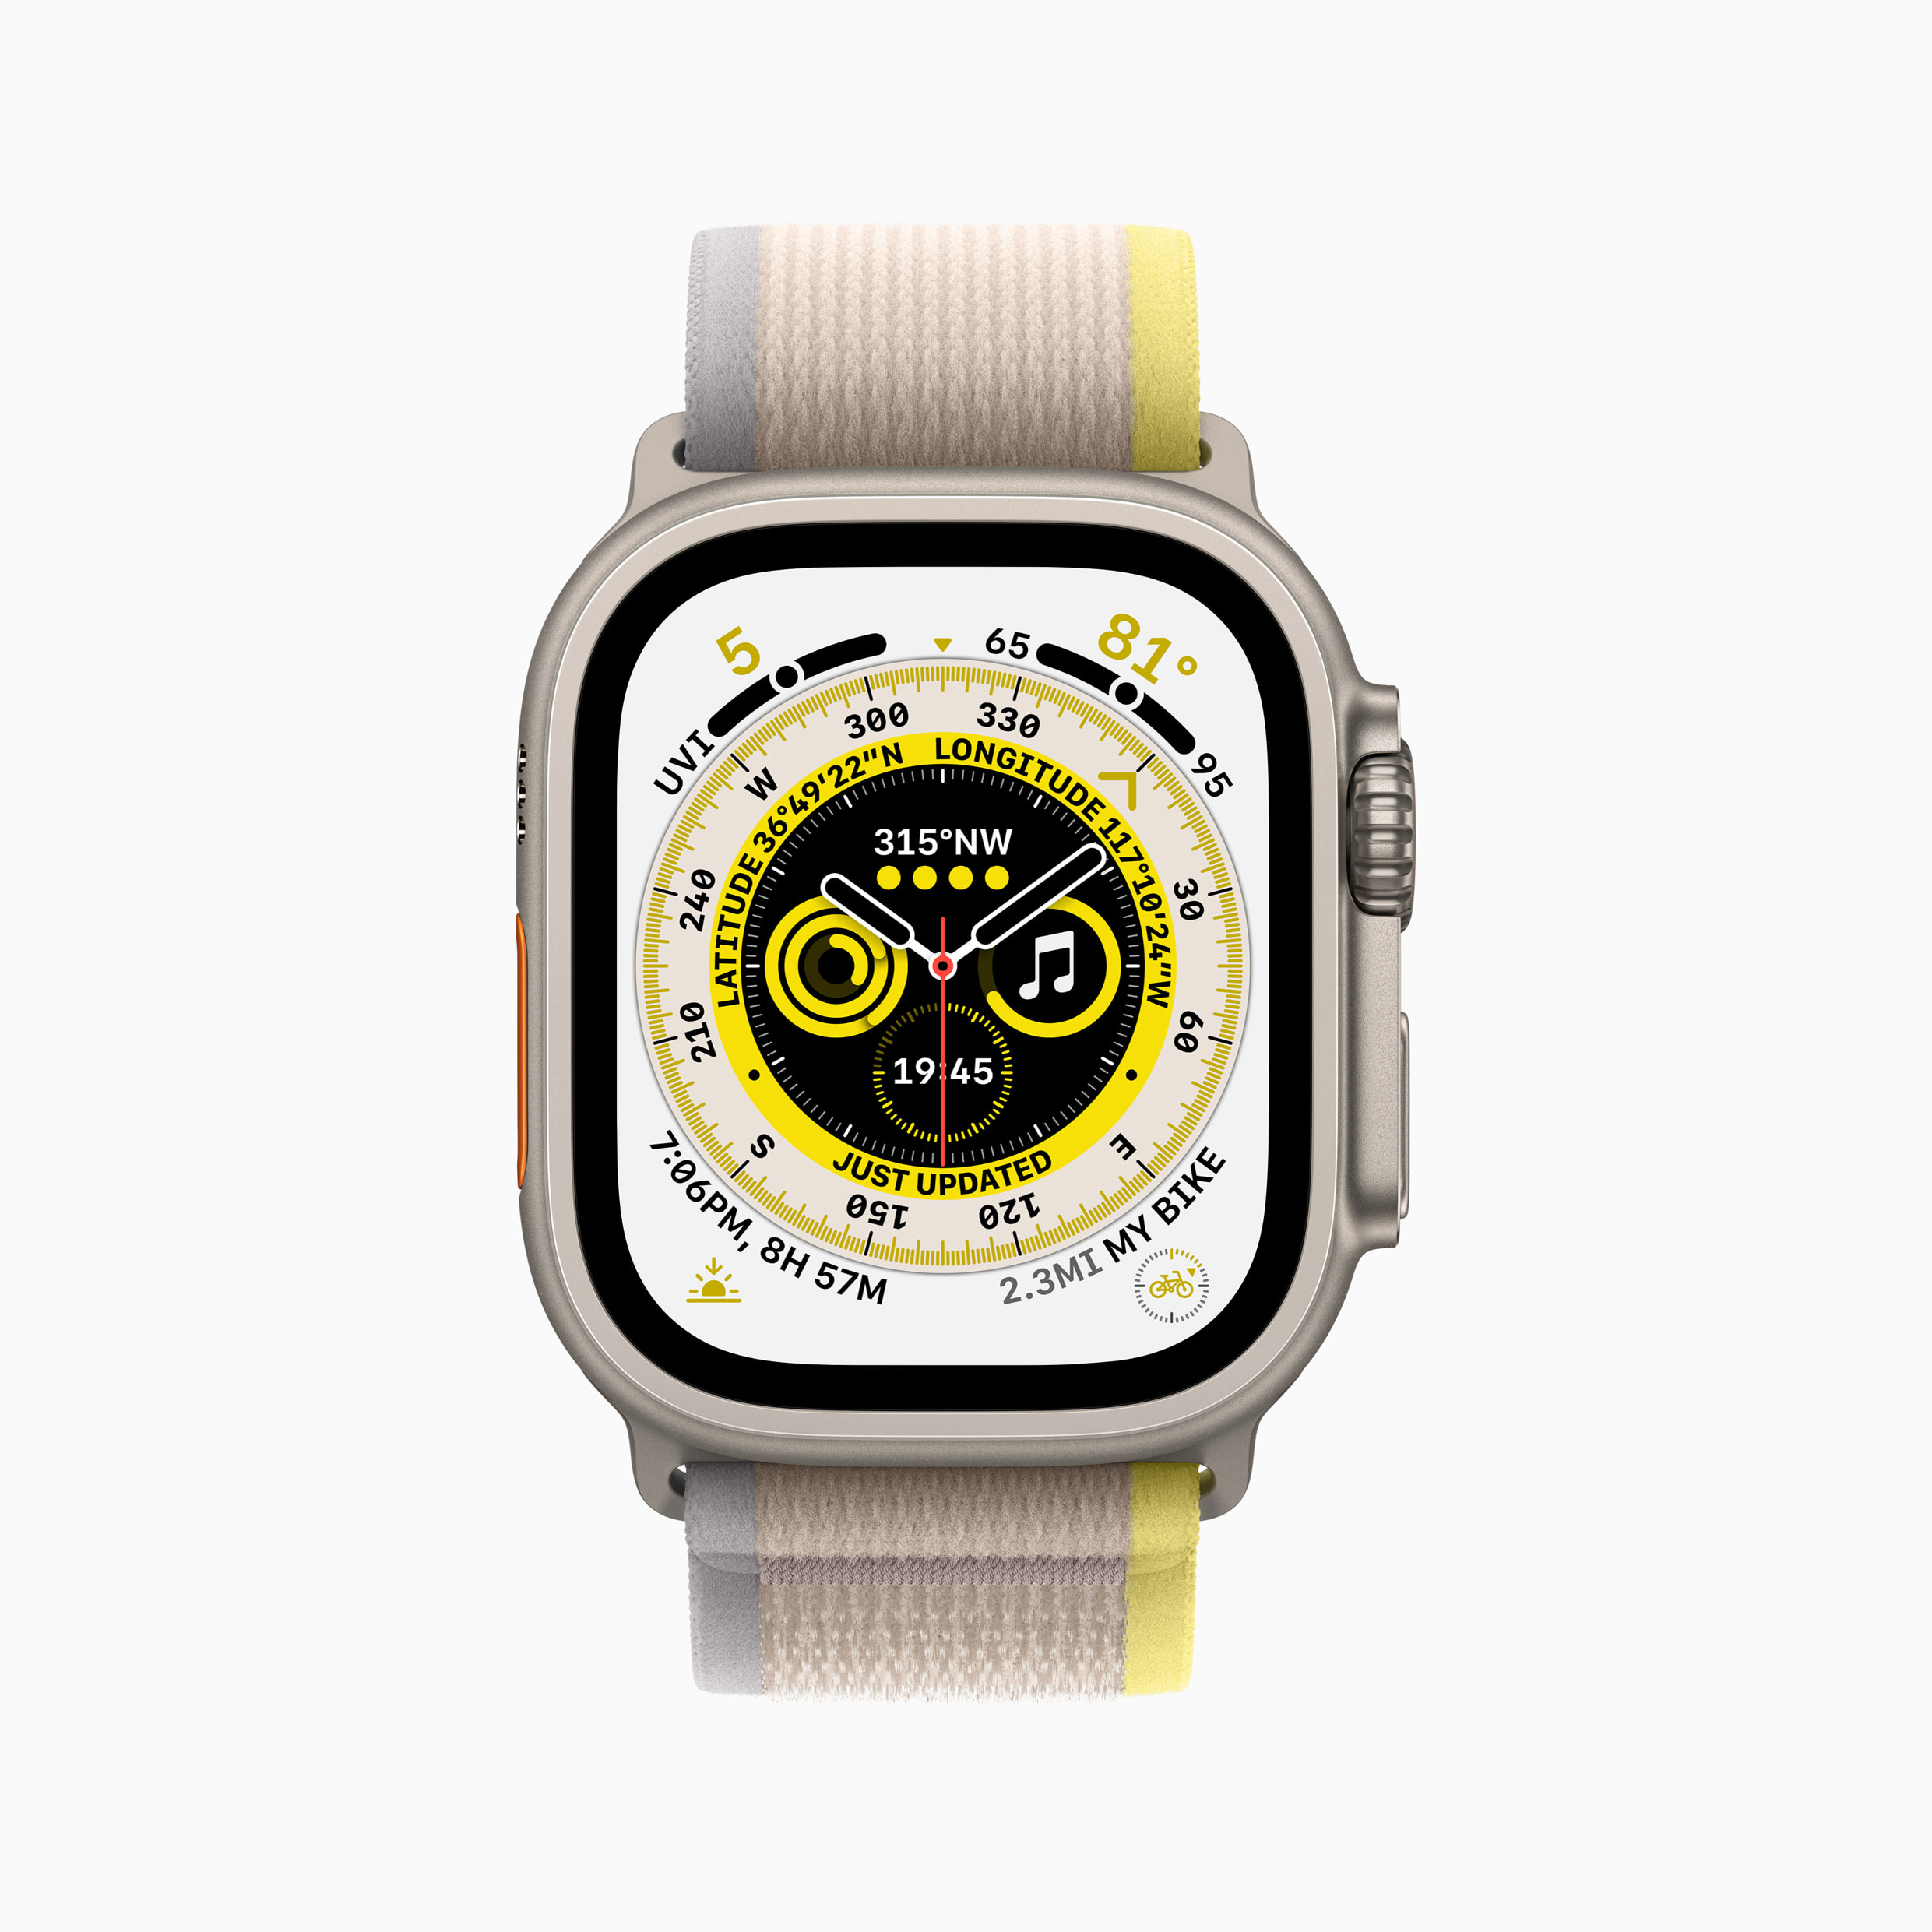 Apple Watch Ultraと次世代のAirPods Proの店頭販売を金曜日に開始 